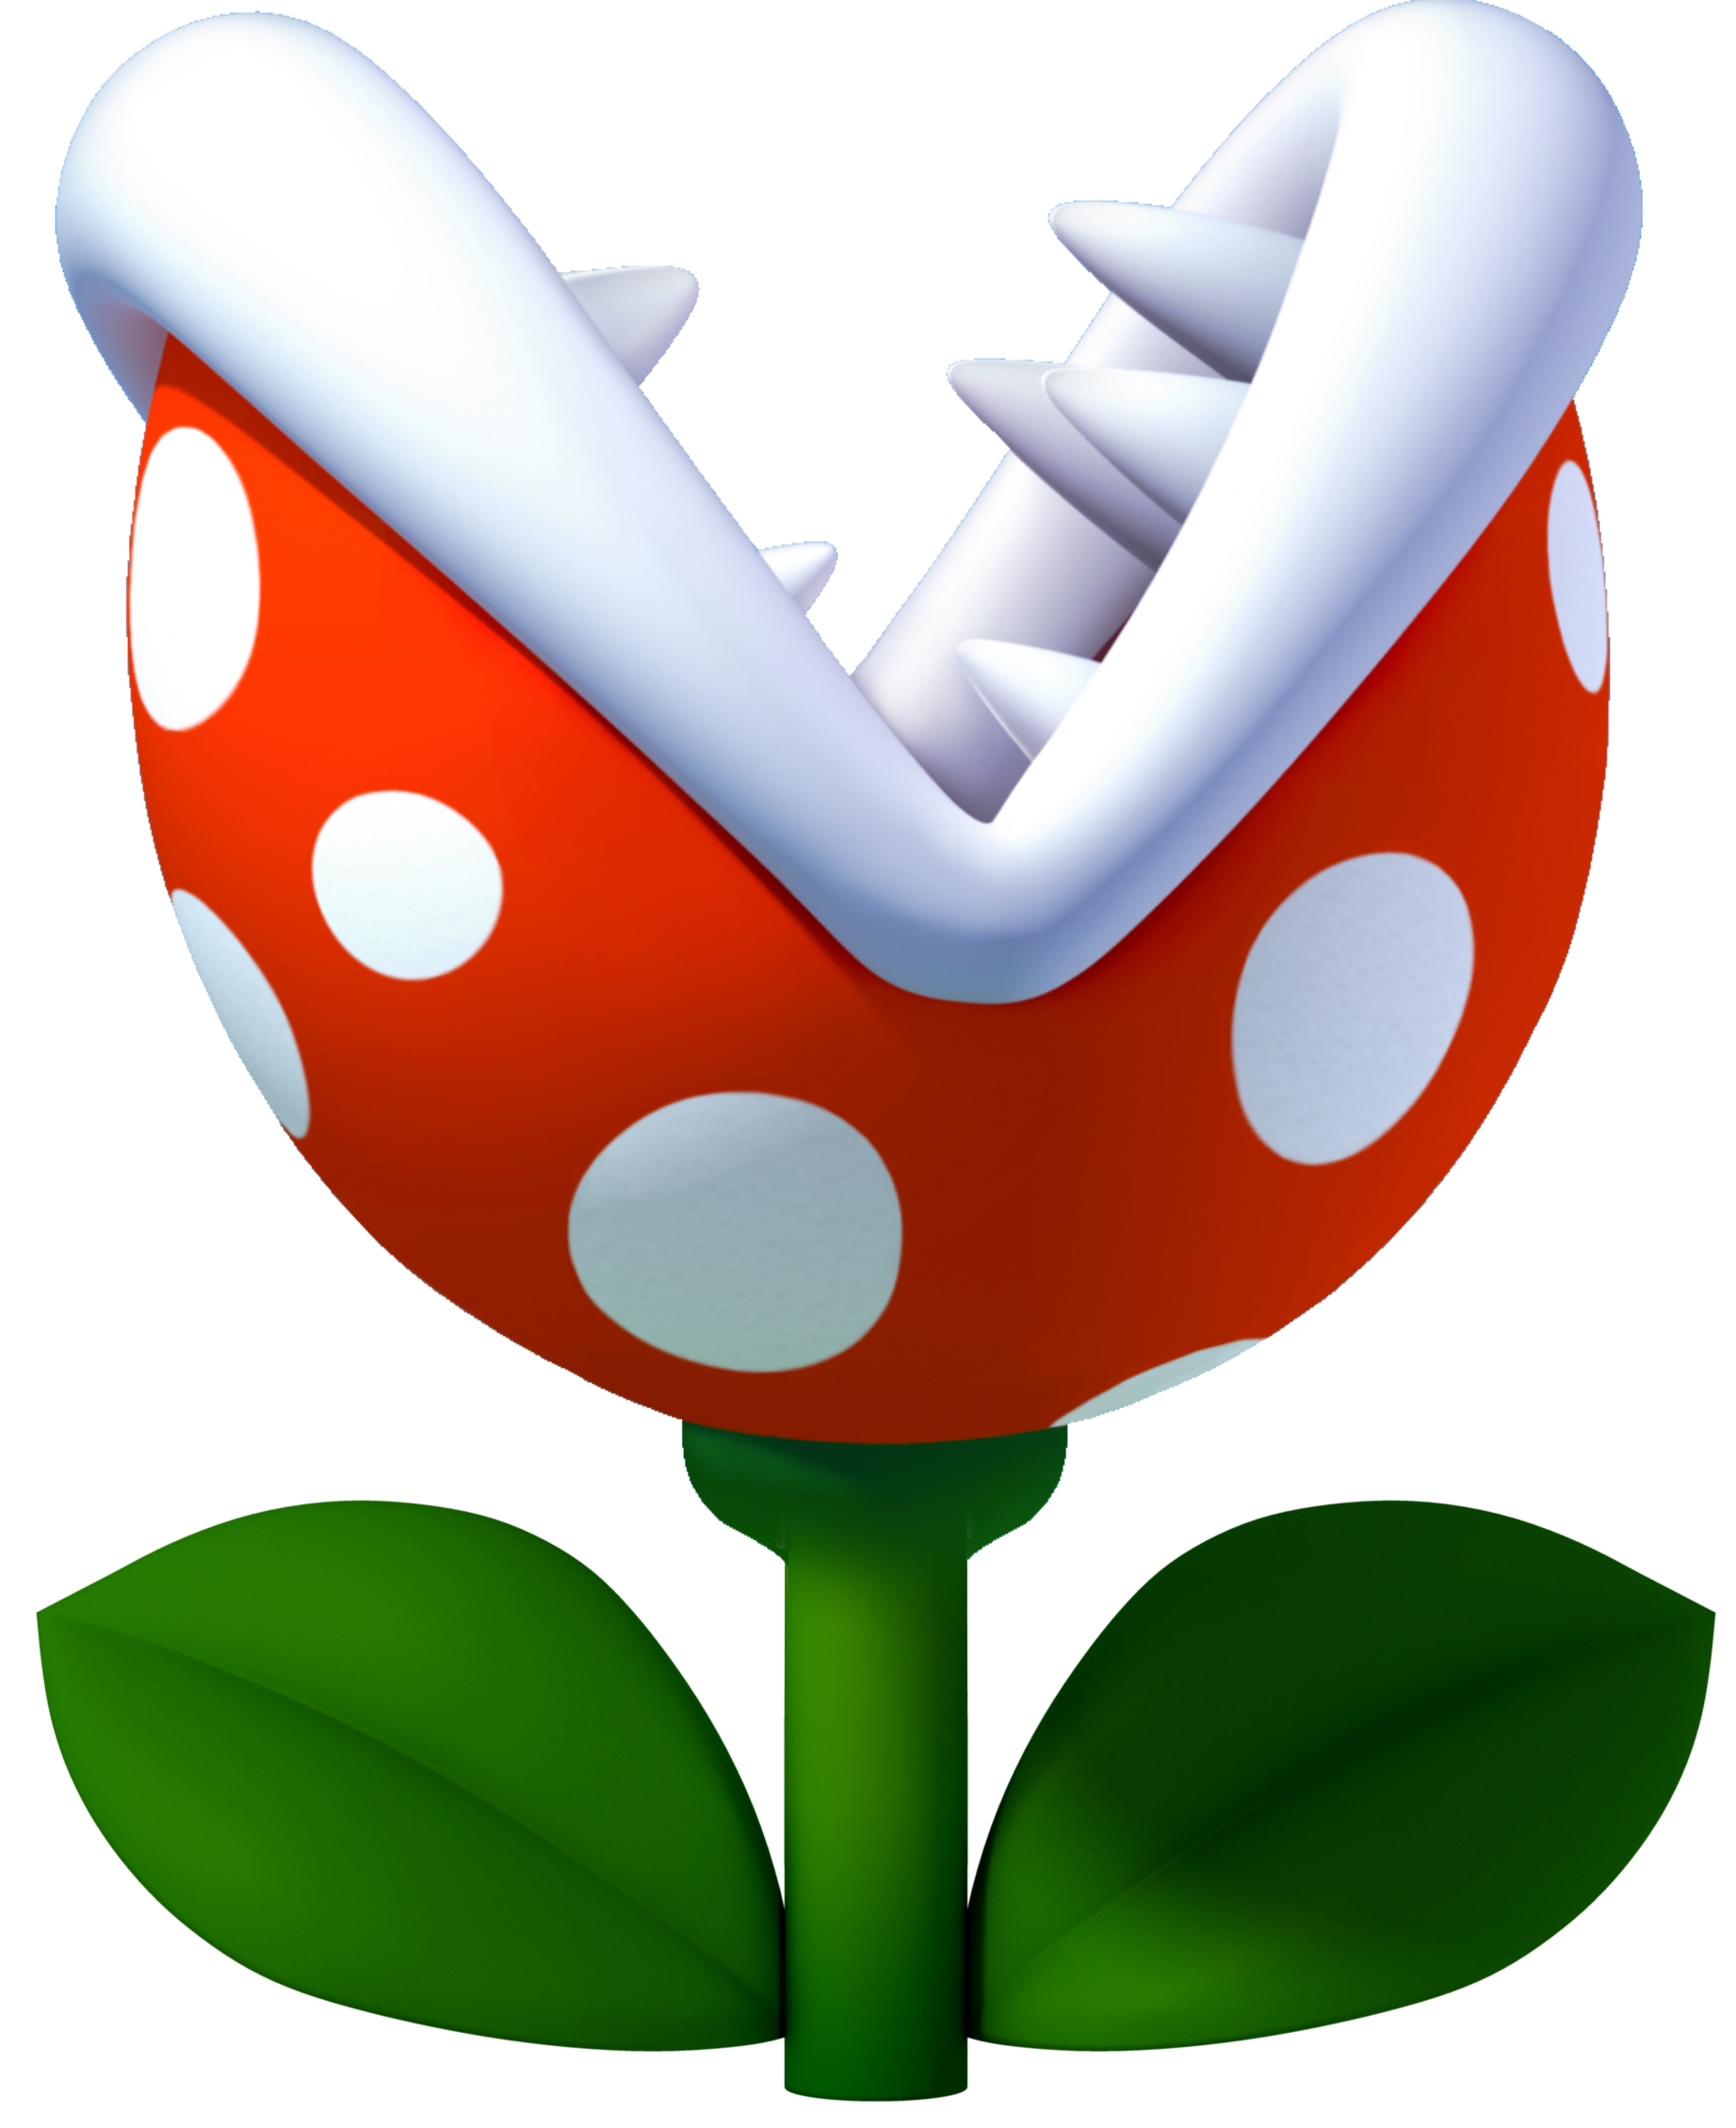 Mario Flower Super Bros Petal Free Download Image PNG Image